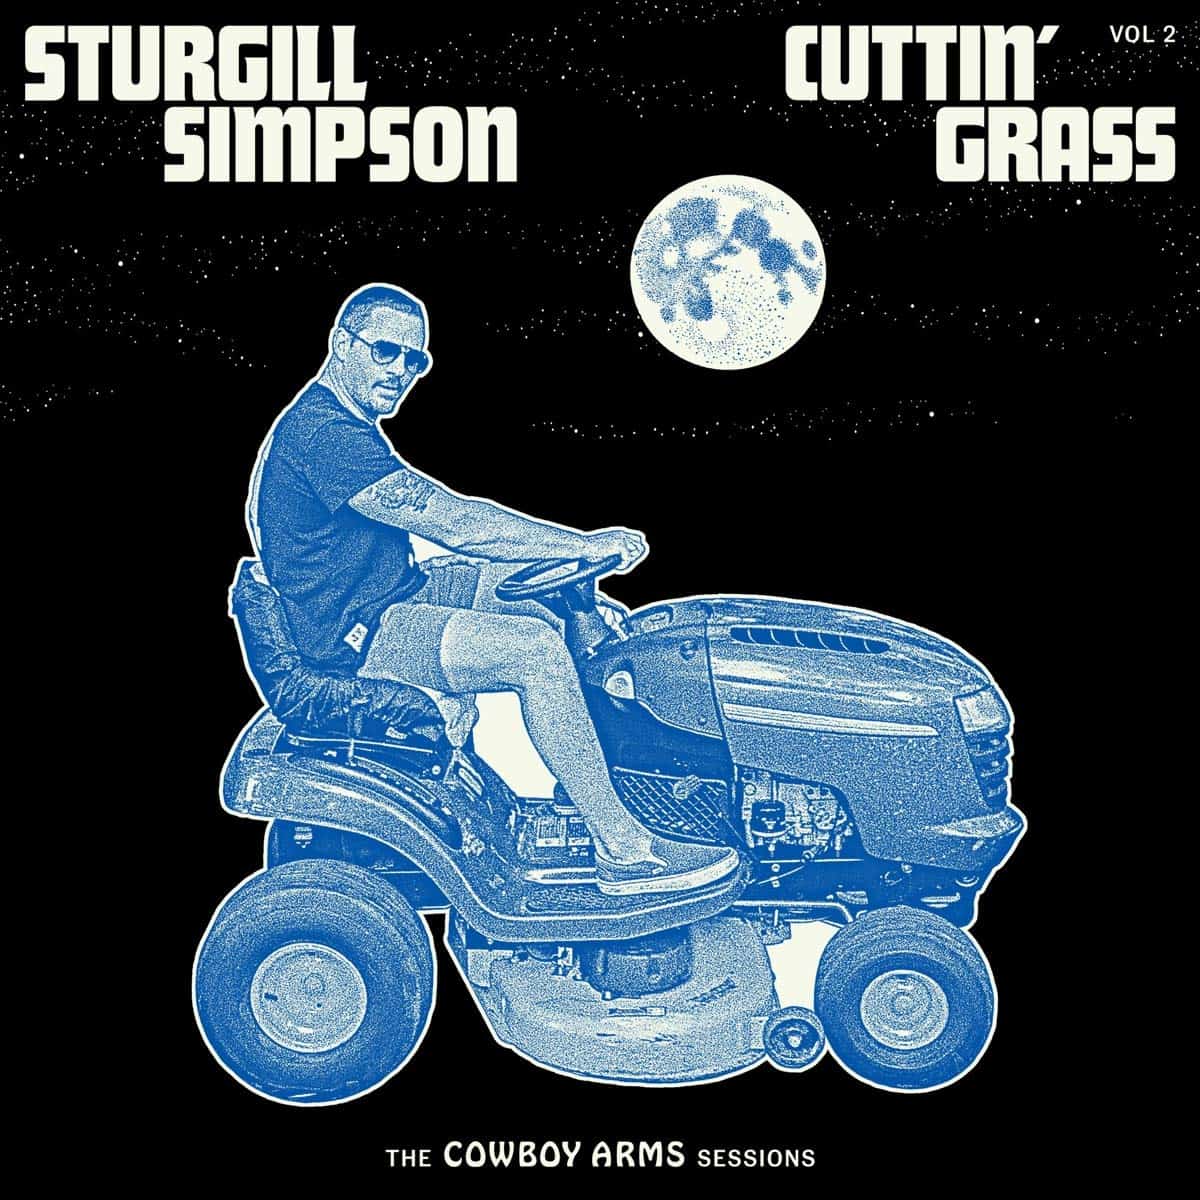 Sturgill-Simpson-Cuttin-the-Grass-Vol-2-vinyl-record-album-front1